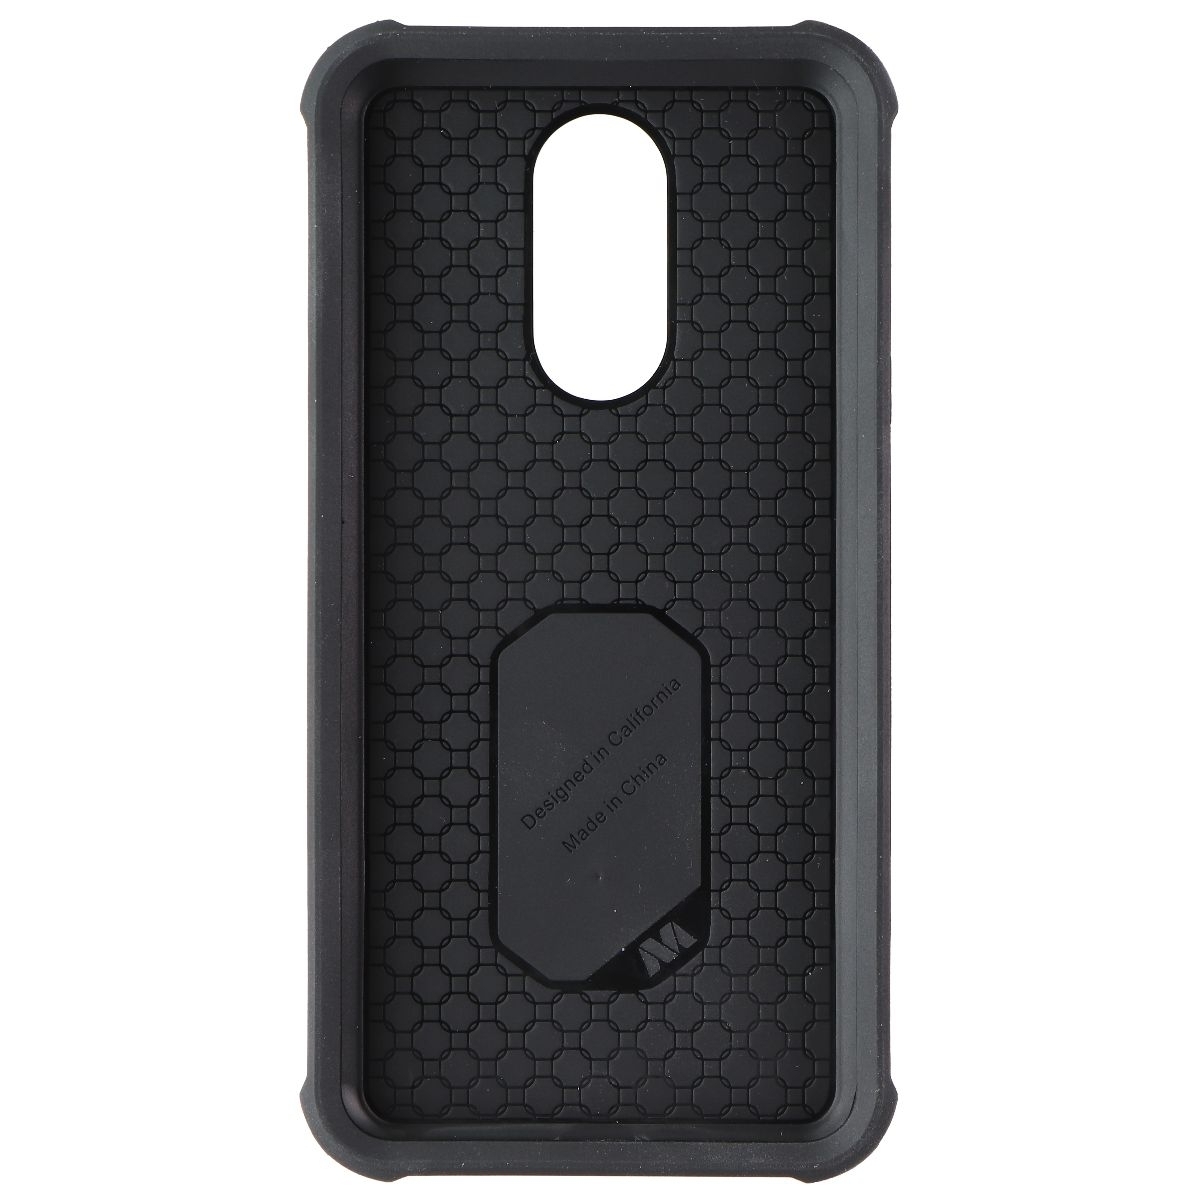 MyBat Premium Hard Case With FingerRing For LG Stylo 5 - Red/Black (Refurbished)